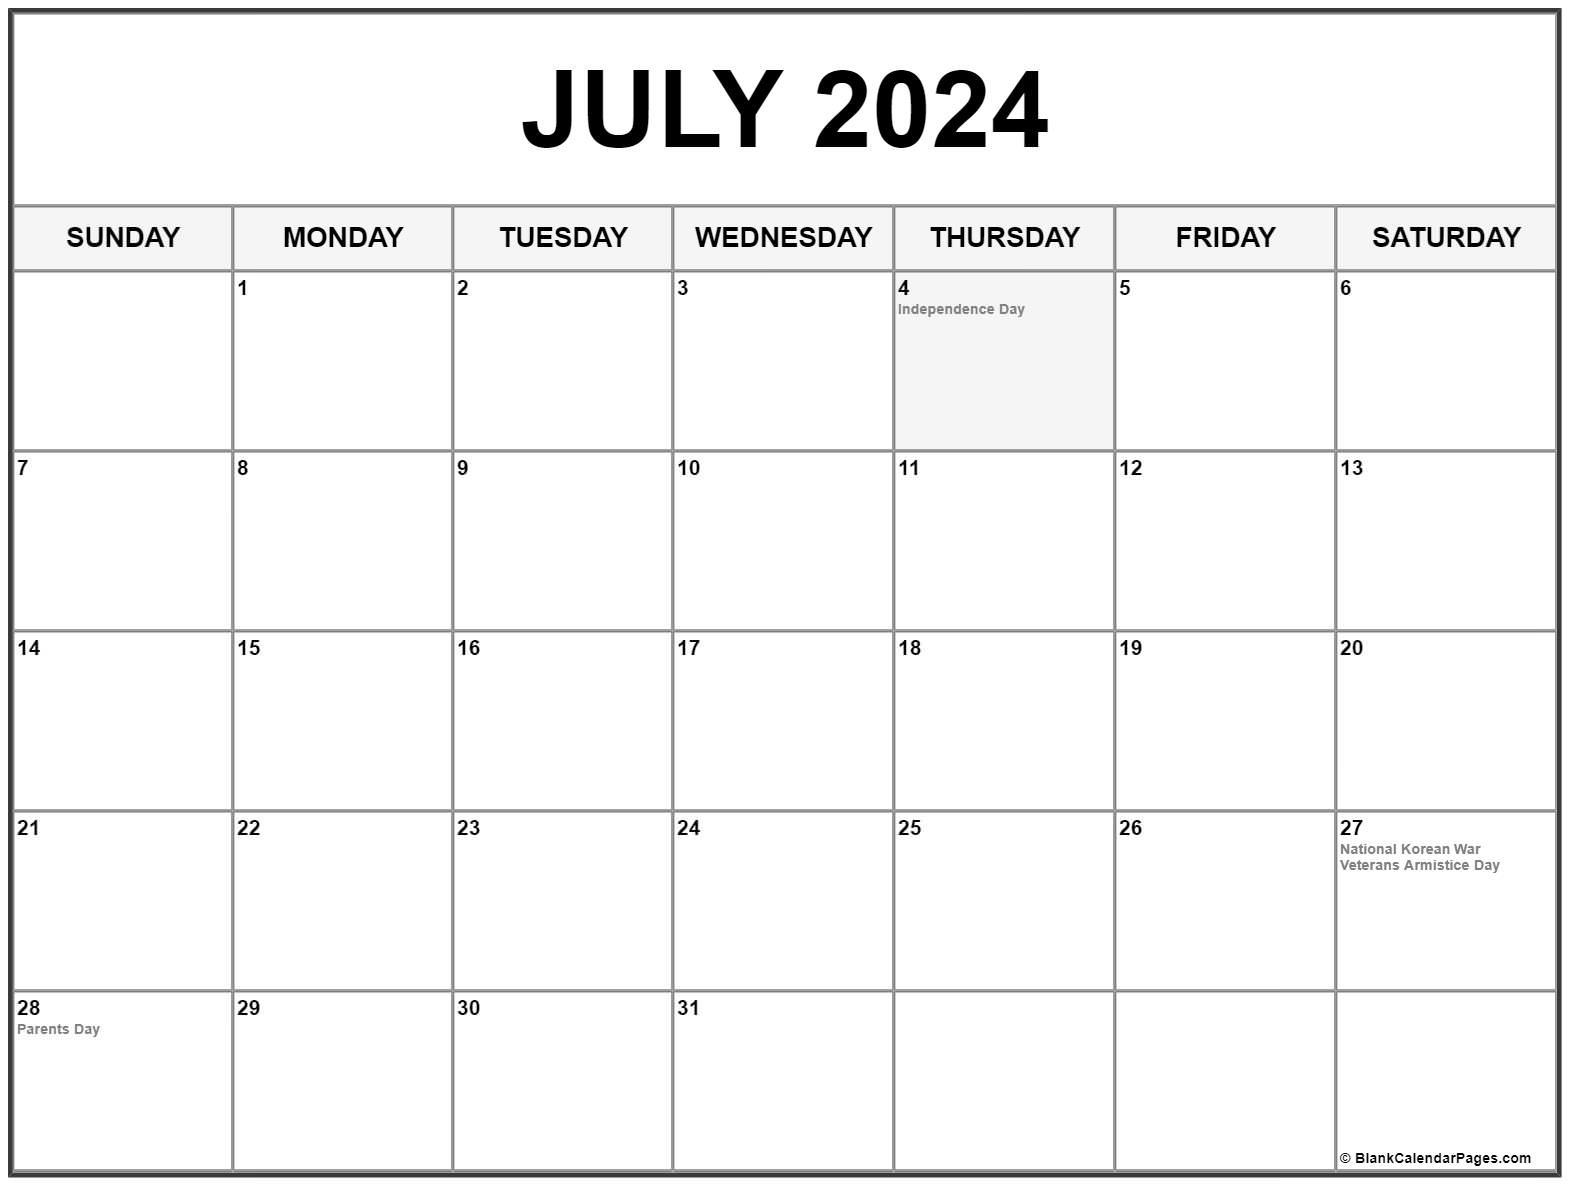 July 2024 With Holidays Calendar regarding 2024 July Calendar With Holidays